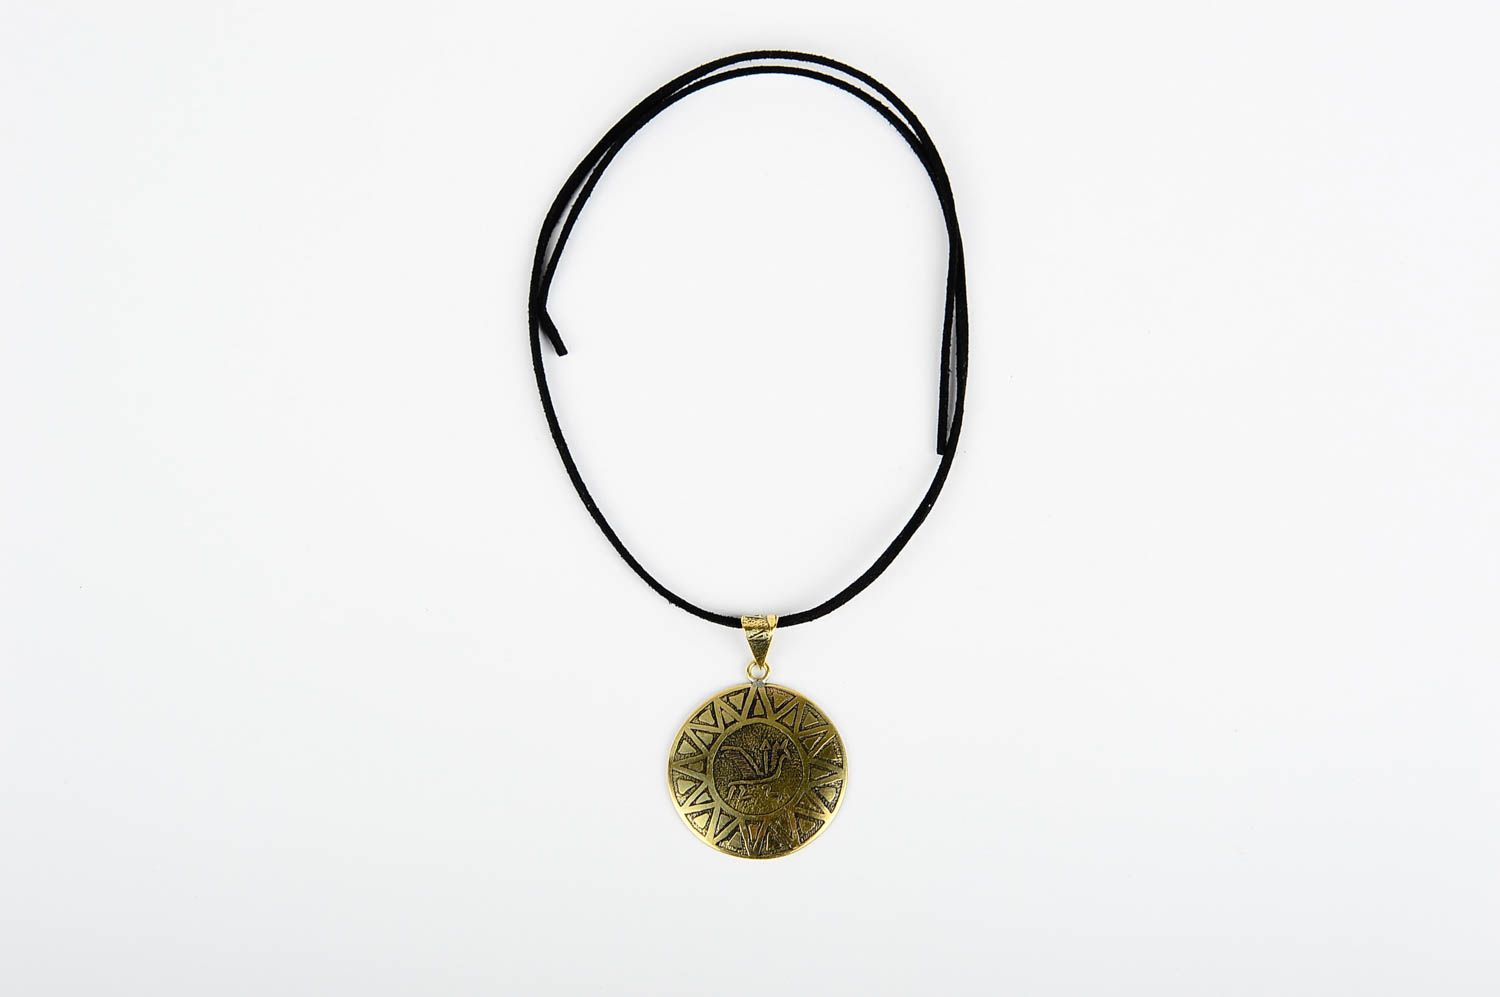 Handmade pendant designer accessory metal jewelry unusual gift for her photo 1